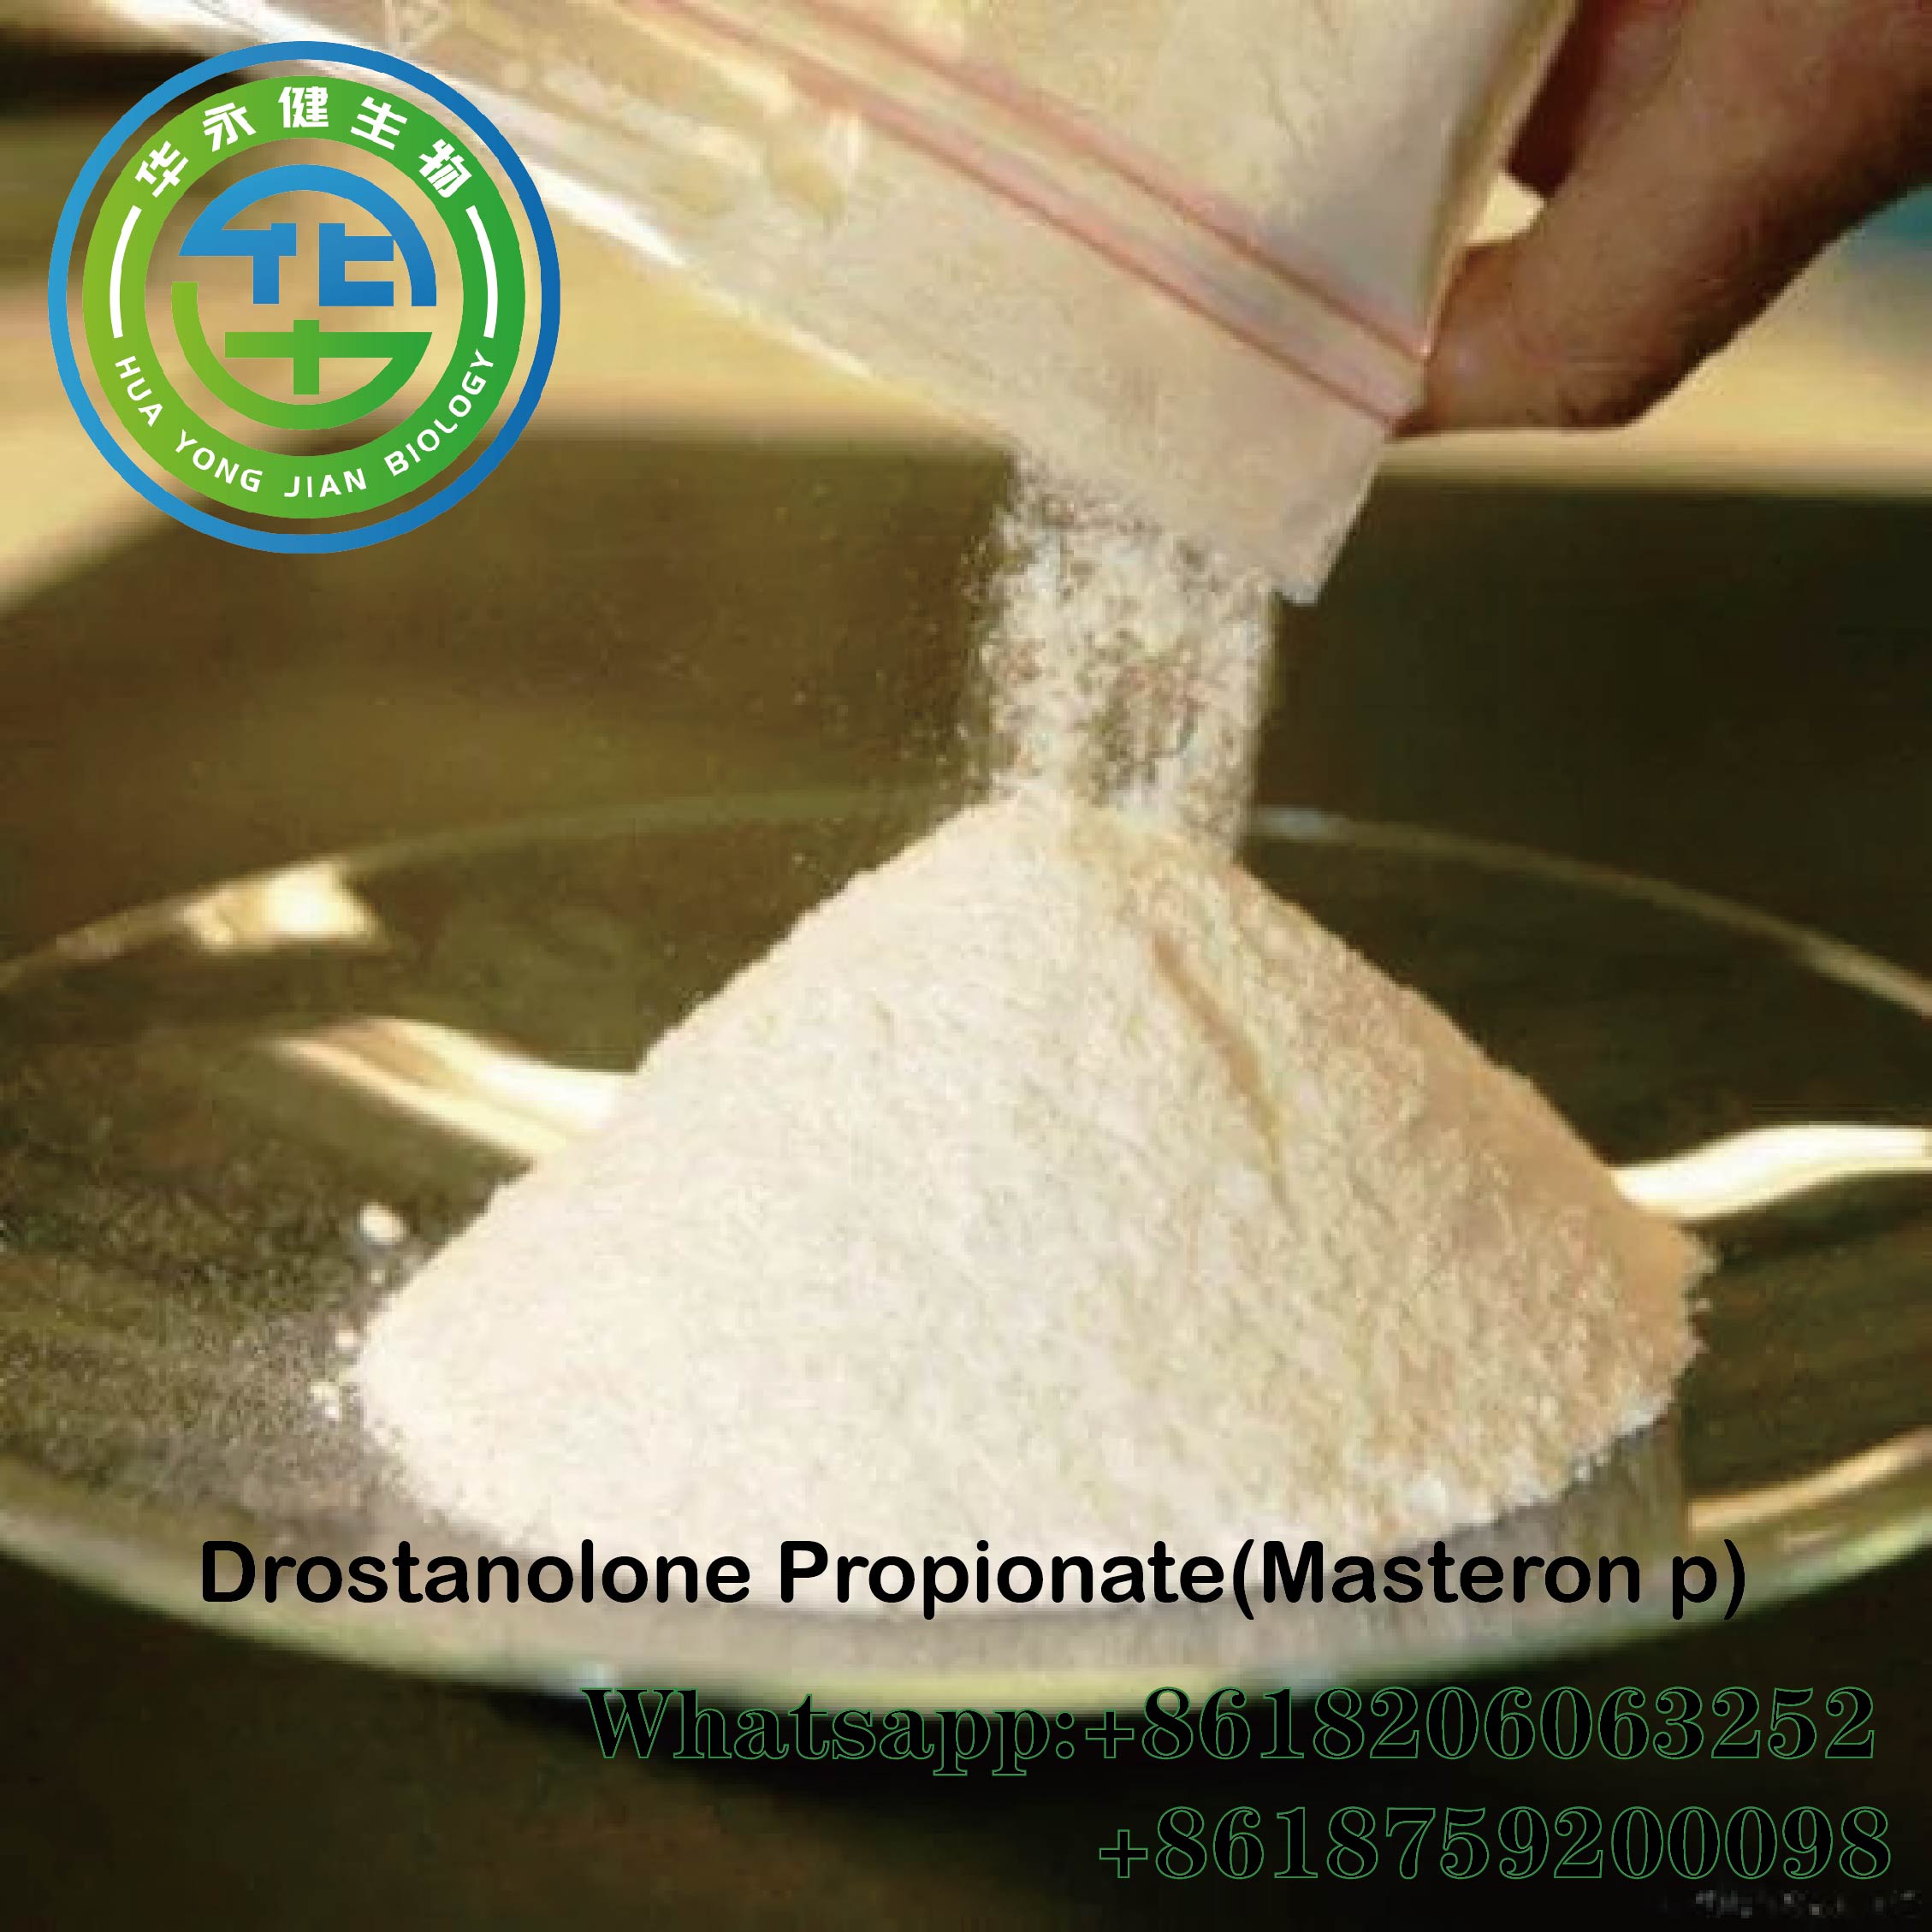 Anabolics Drostanolone Propionate Cas 521-12-0 Raw Steroids Powder Masteron p með Safe Delivery Paypal Samþykkt Valin mynd